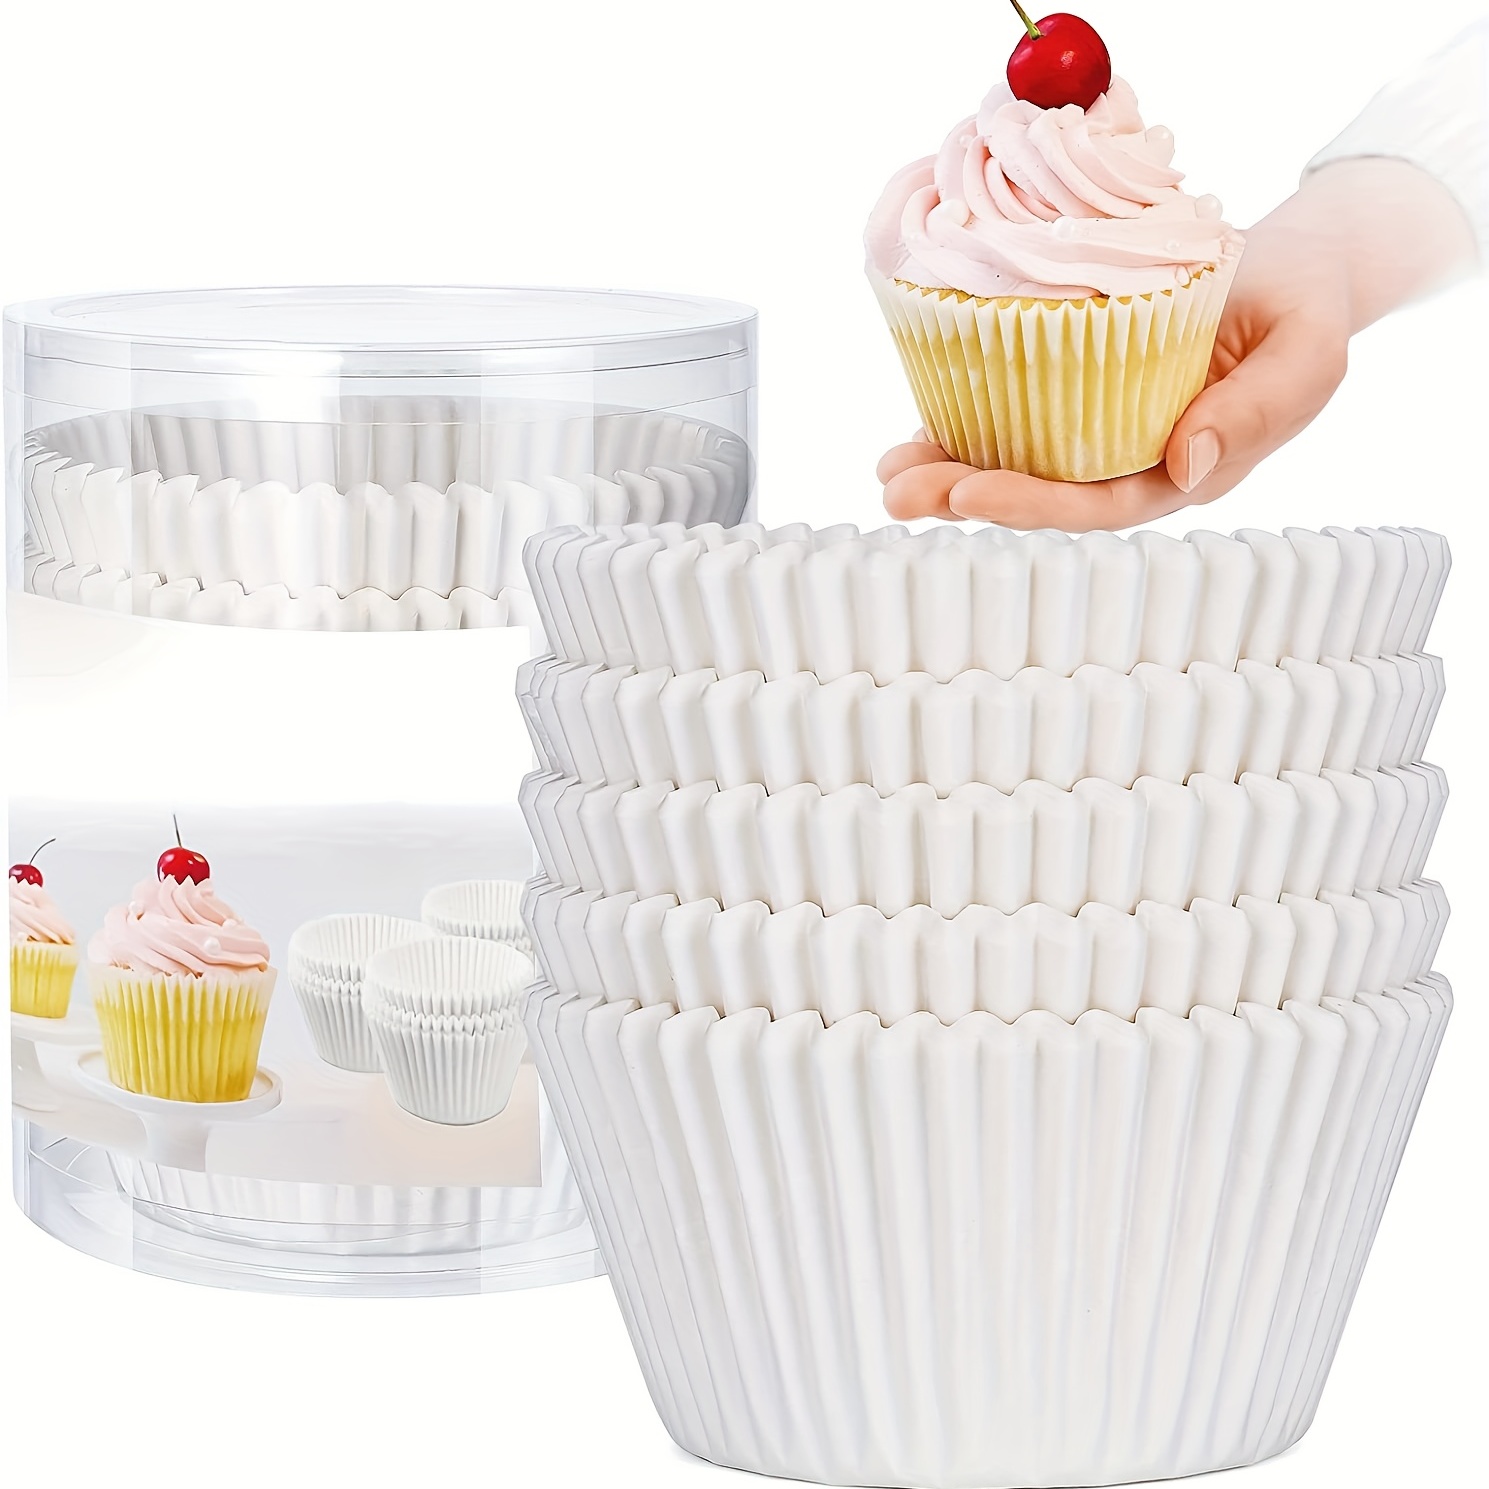 Large Cupcake Liners - Pack of 200 Kraft